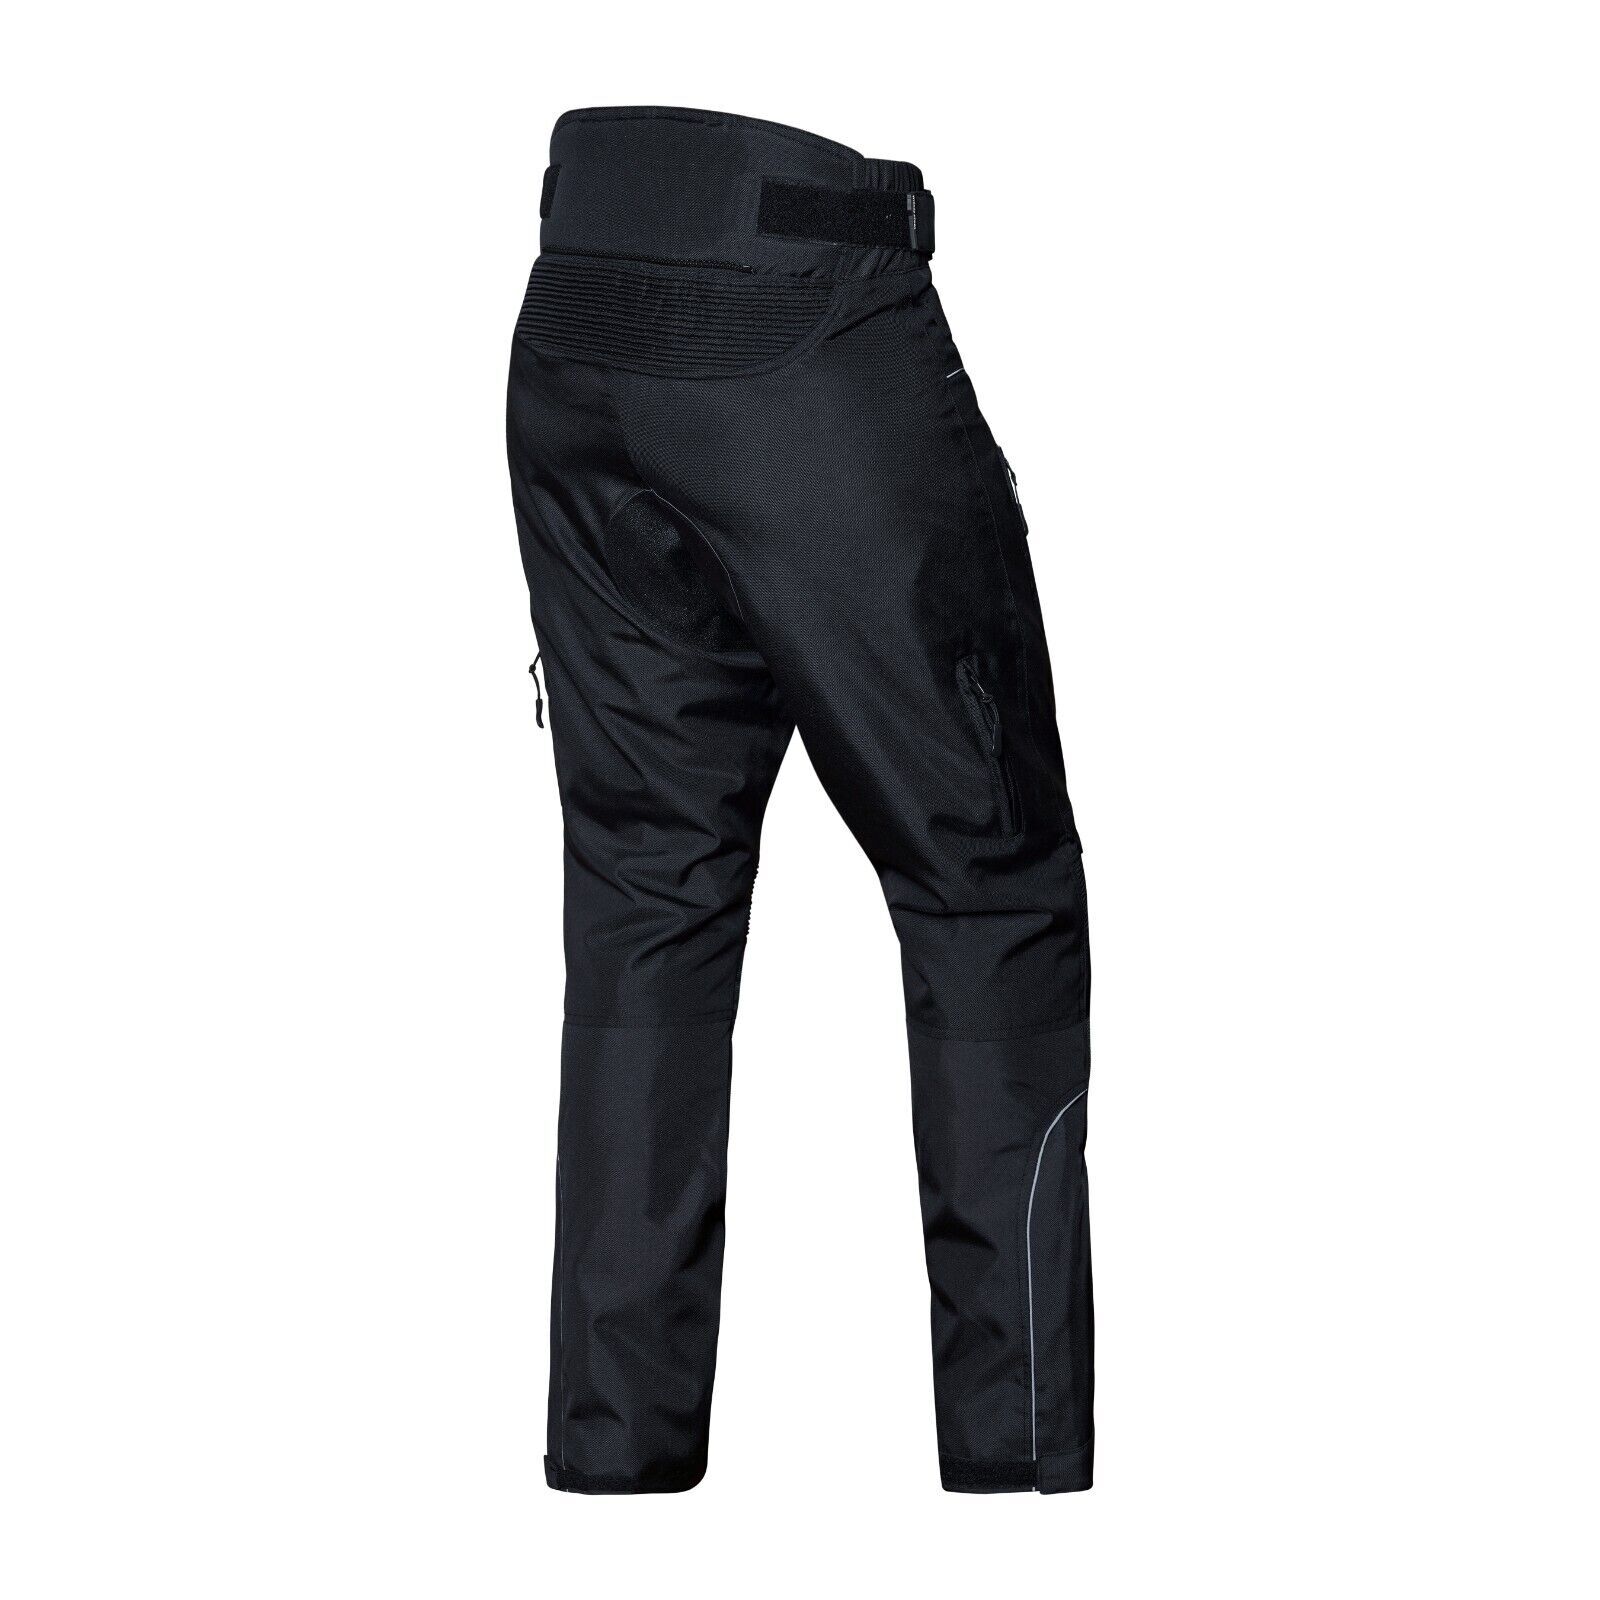 Anchorage Men's Textile Waterproof Riding Pants